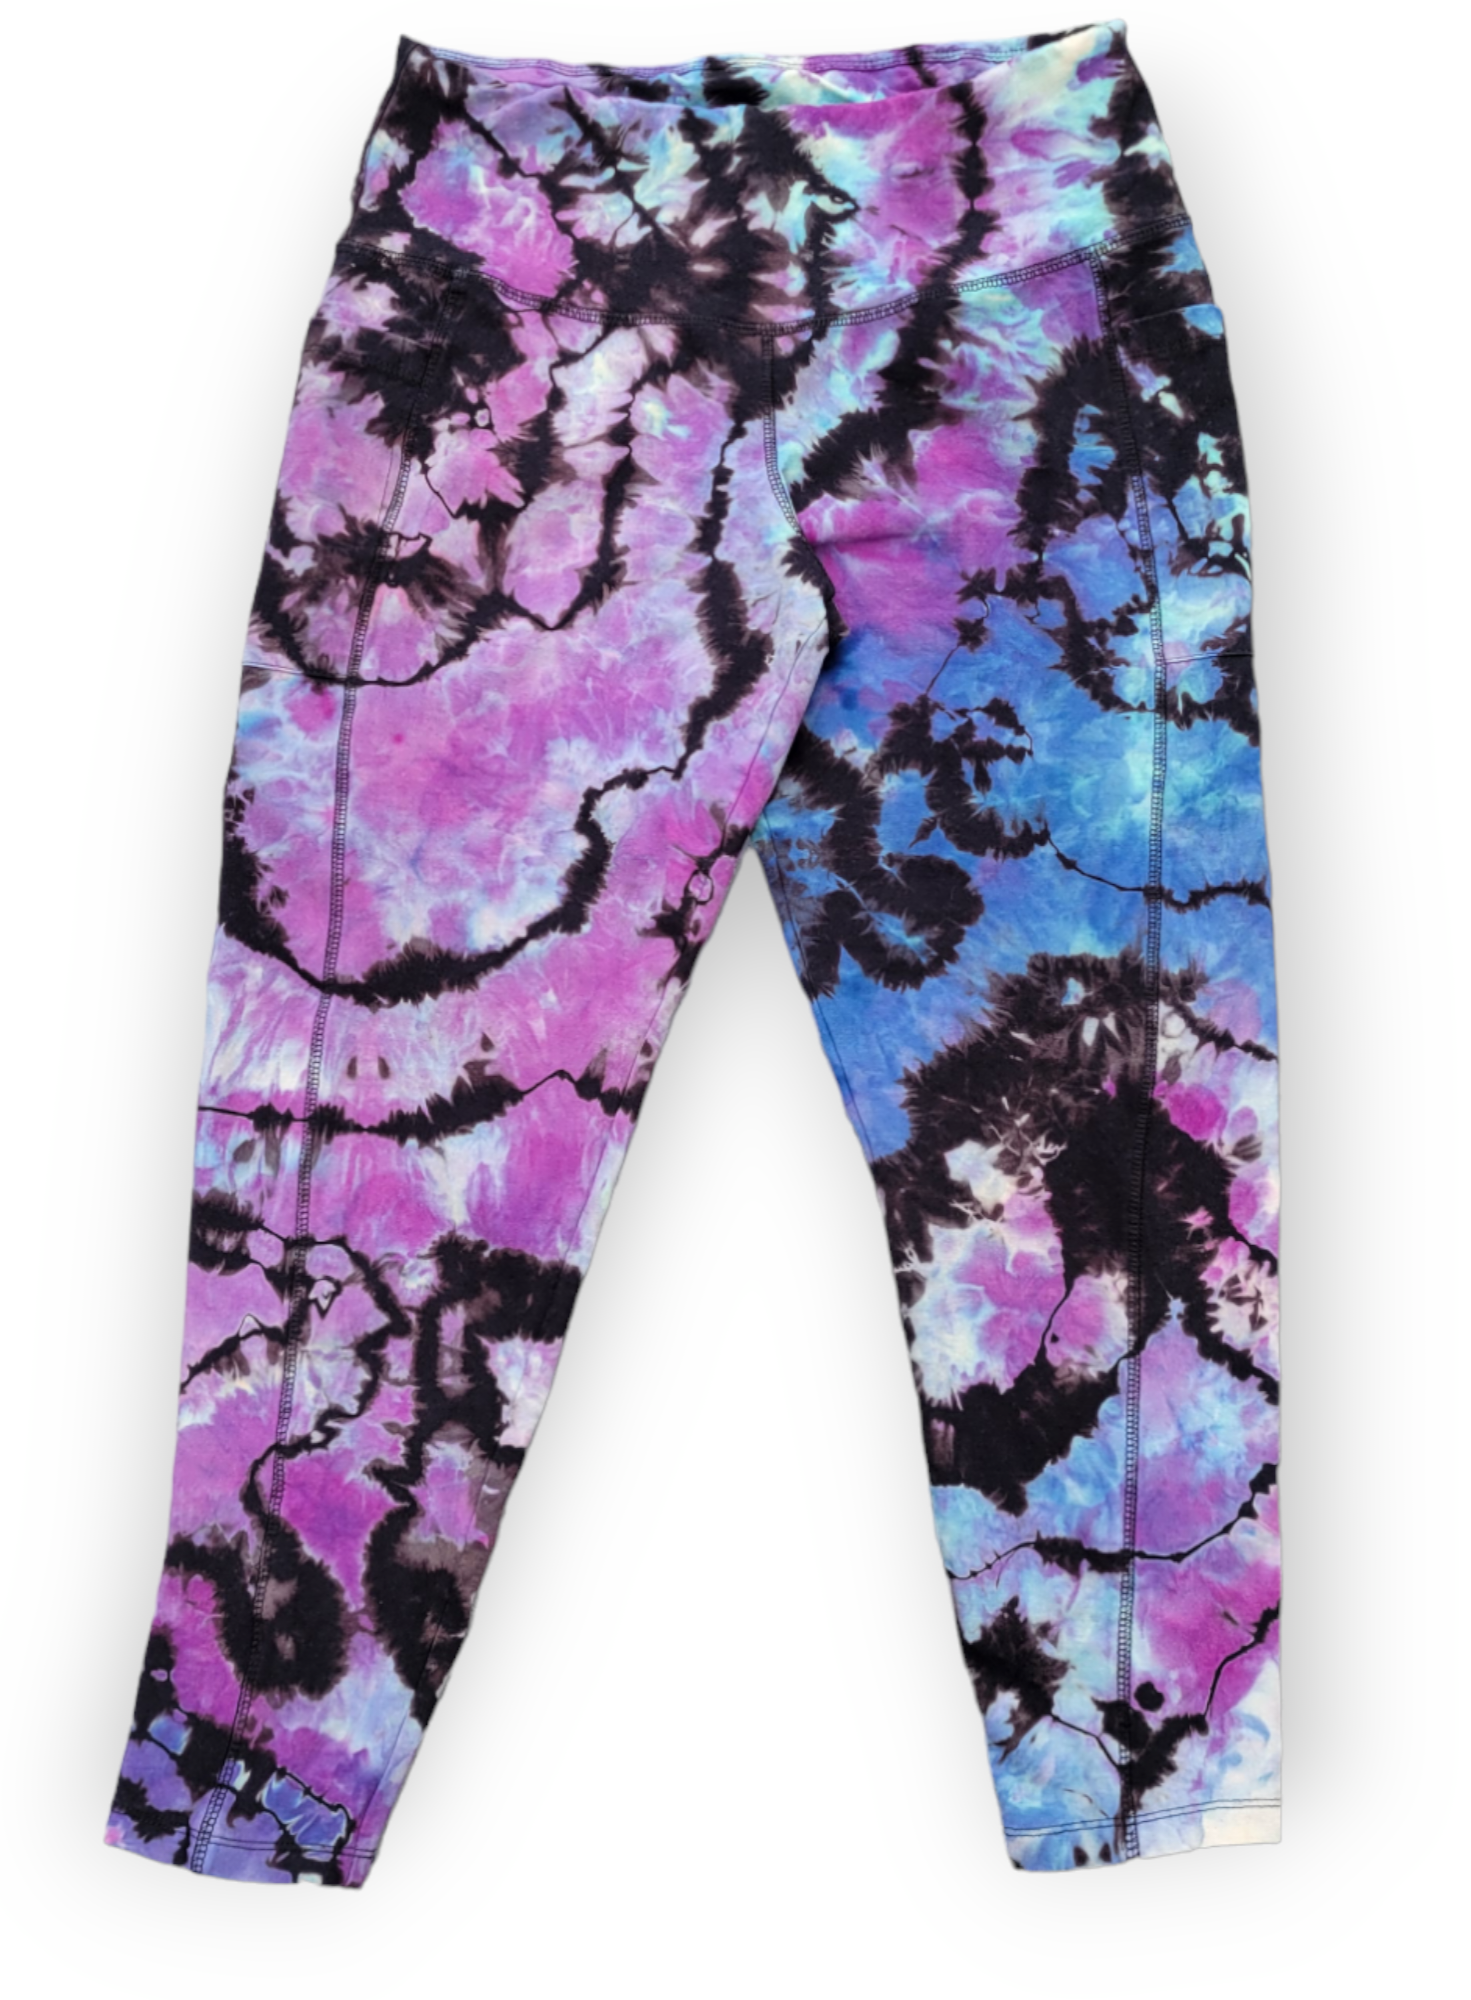 Women's XL Reverse-dyed Yoga Pants – Sunlight Splatter Dyes